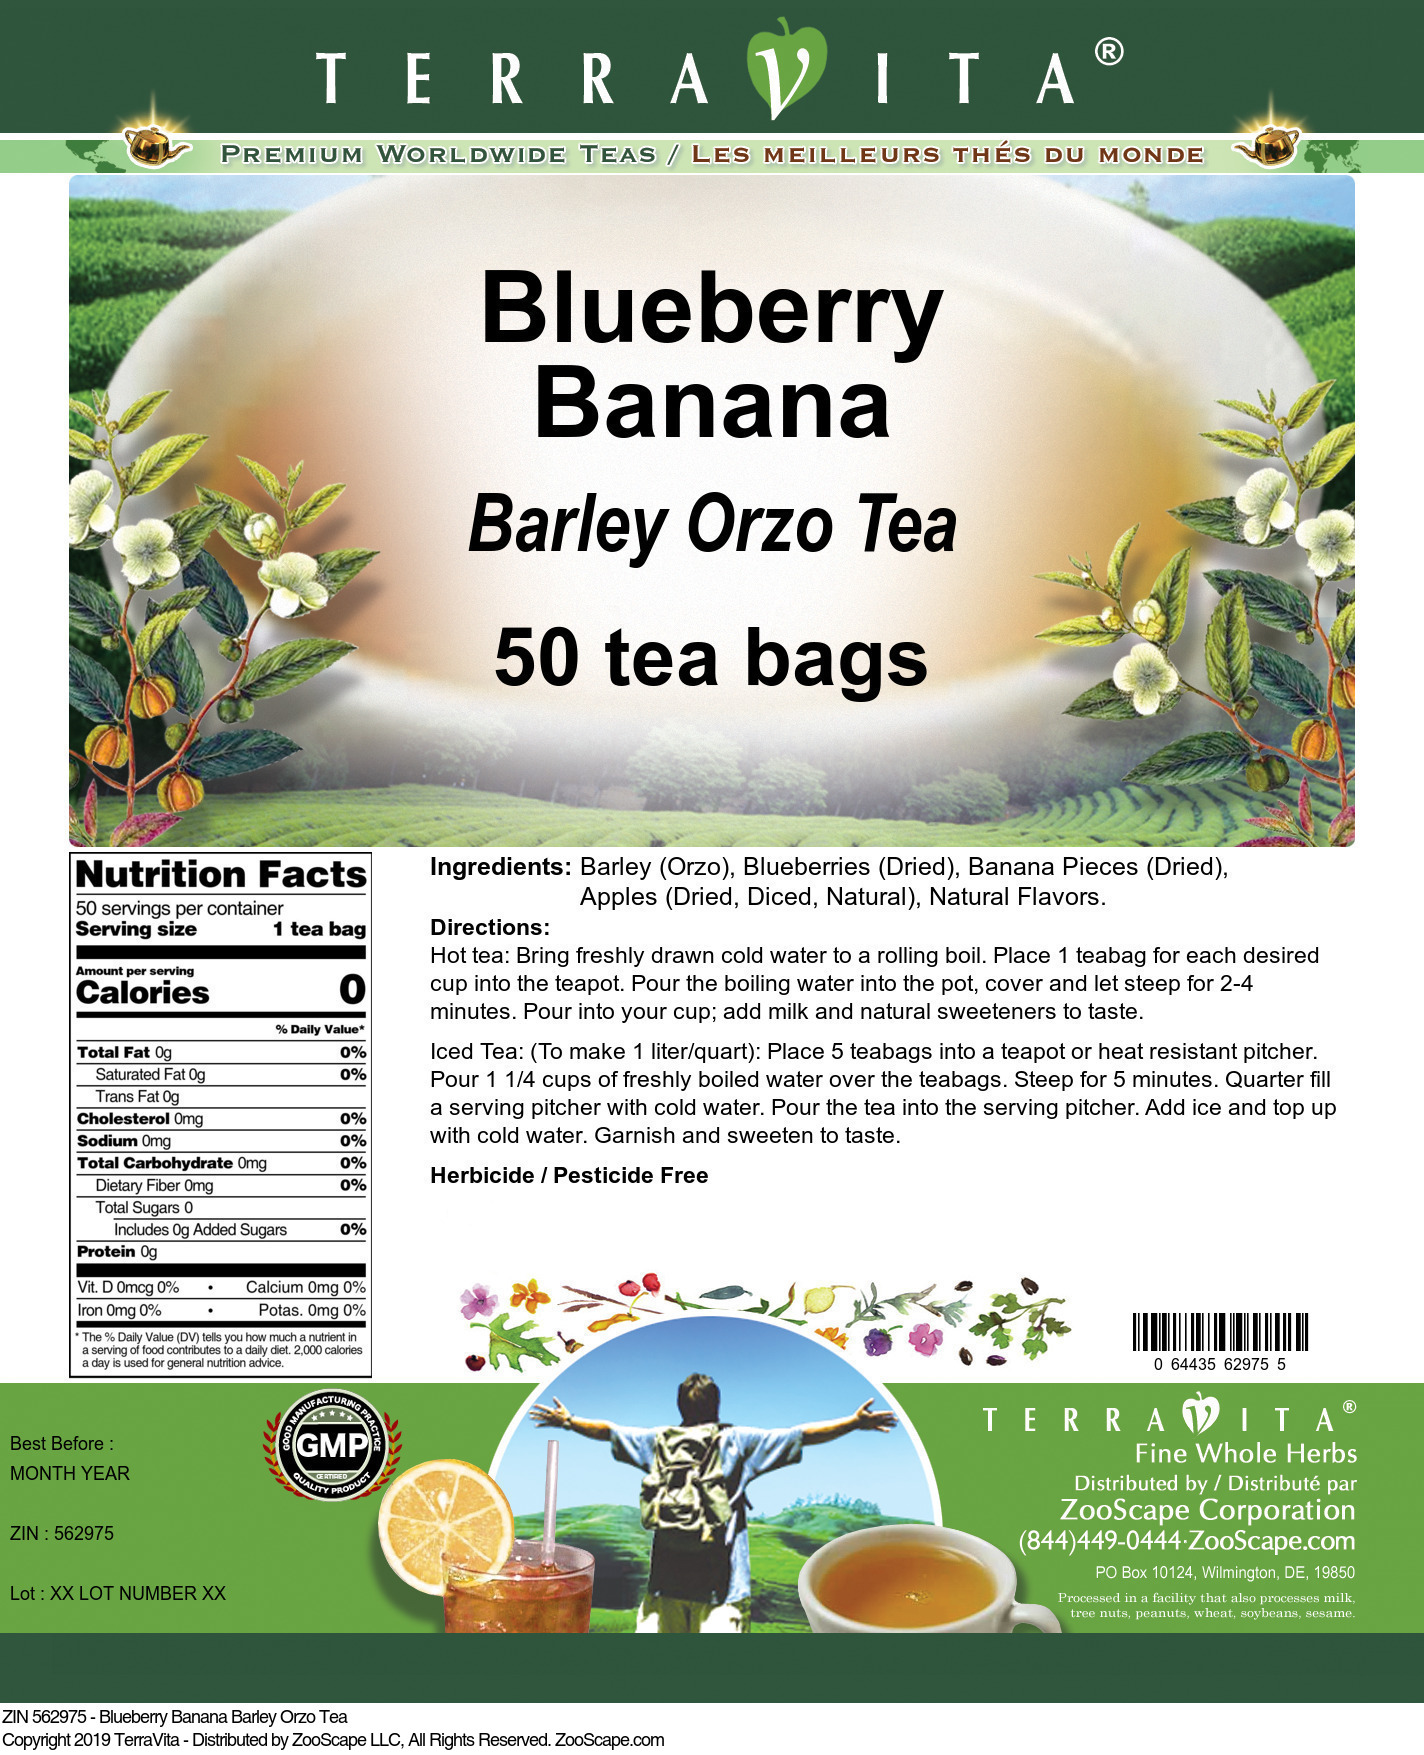 Blueberry Banana Barley Orzo Tea - Label